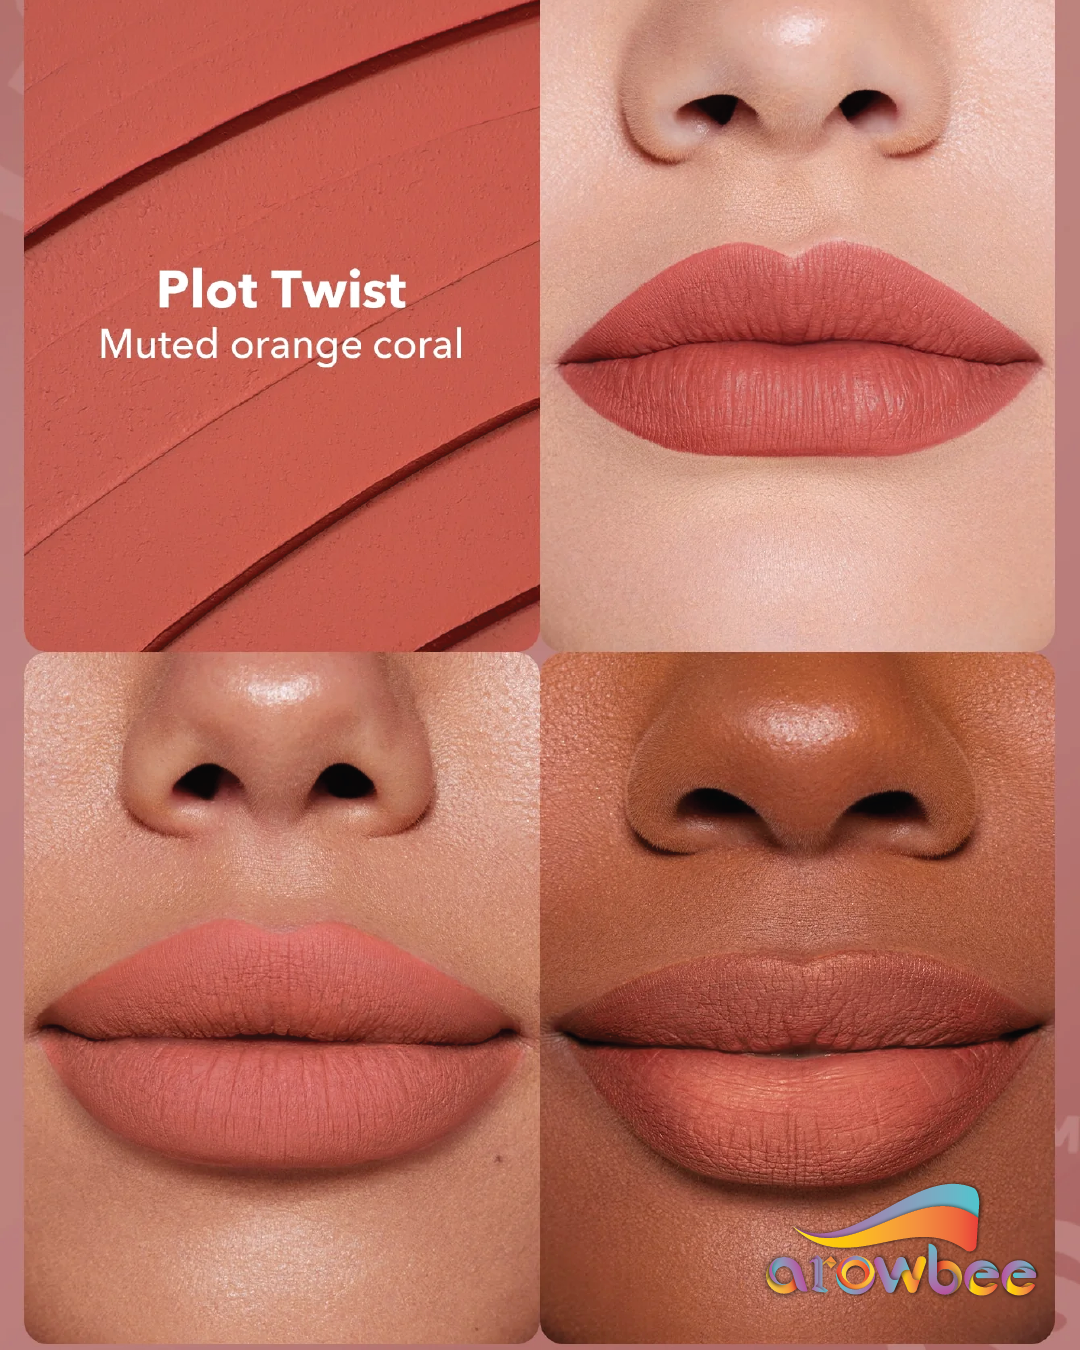 SHEGLAM Dynamatte Boom Long-Lasting Matte Lipstick